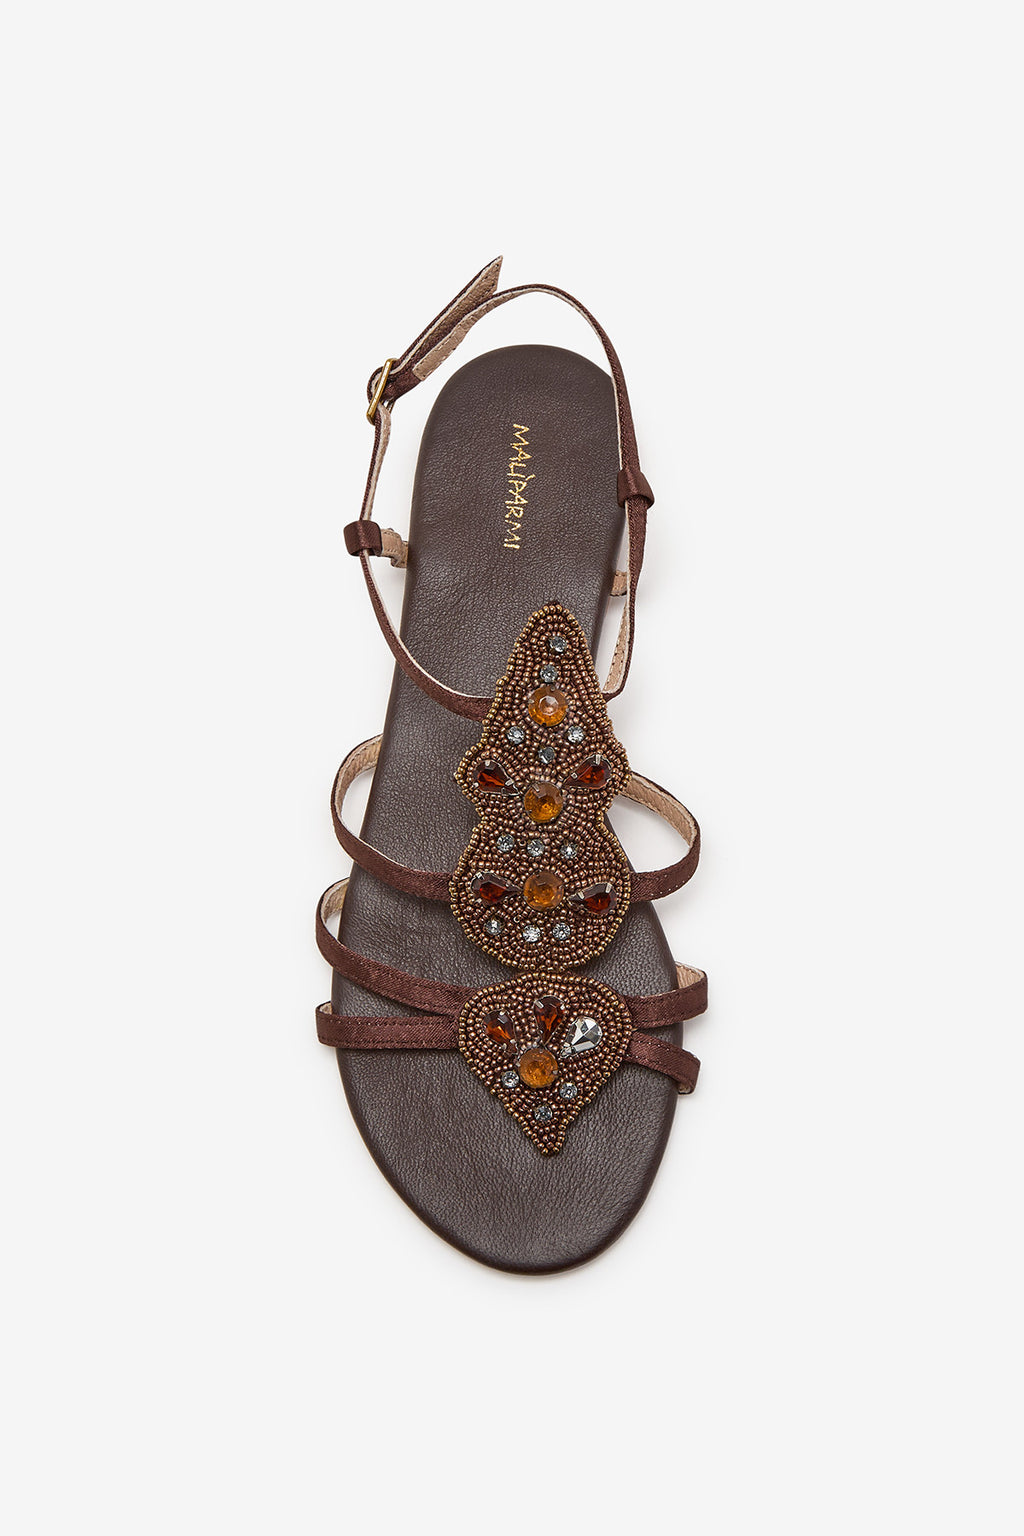 bronze precious leather sandal